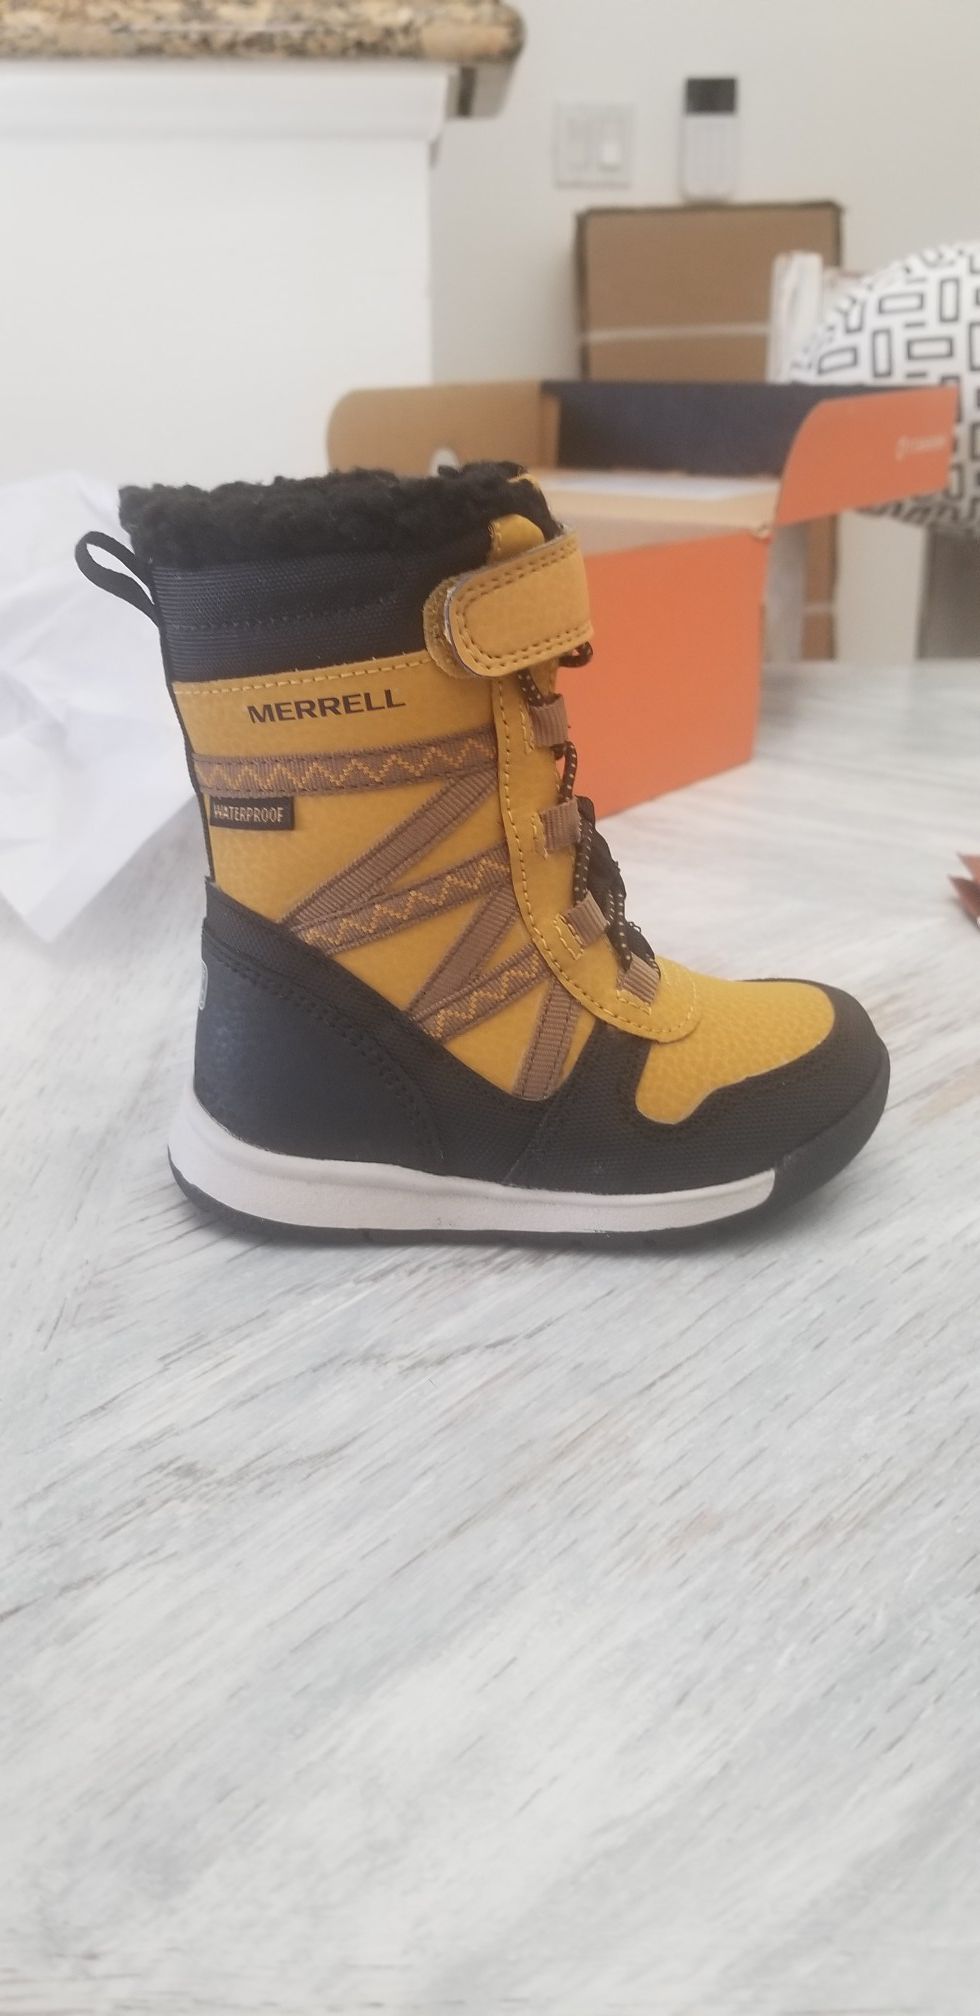 Merrell toddler snow boots